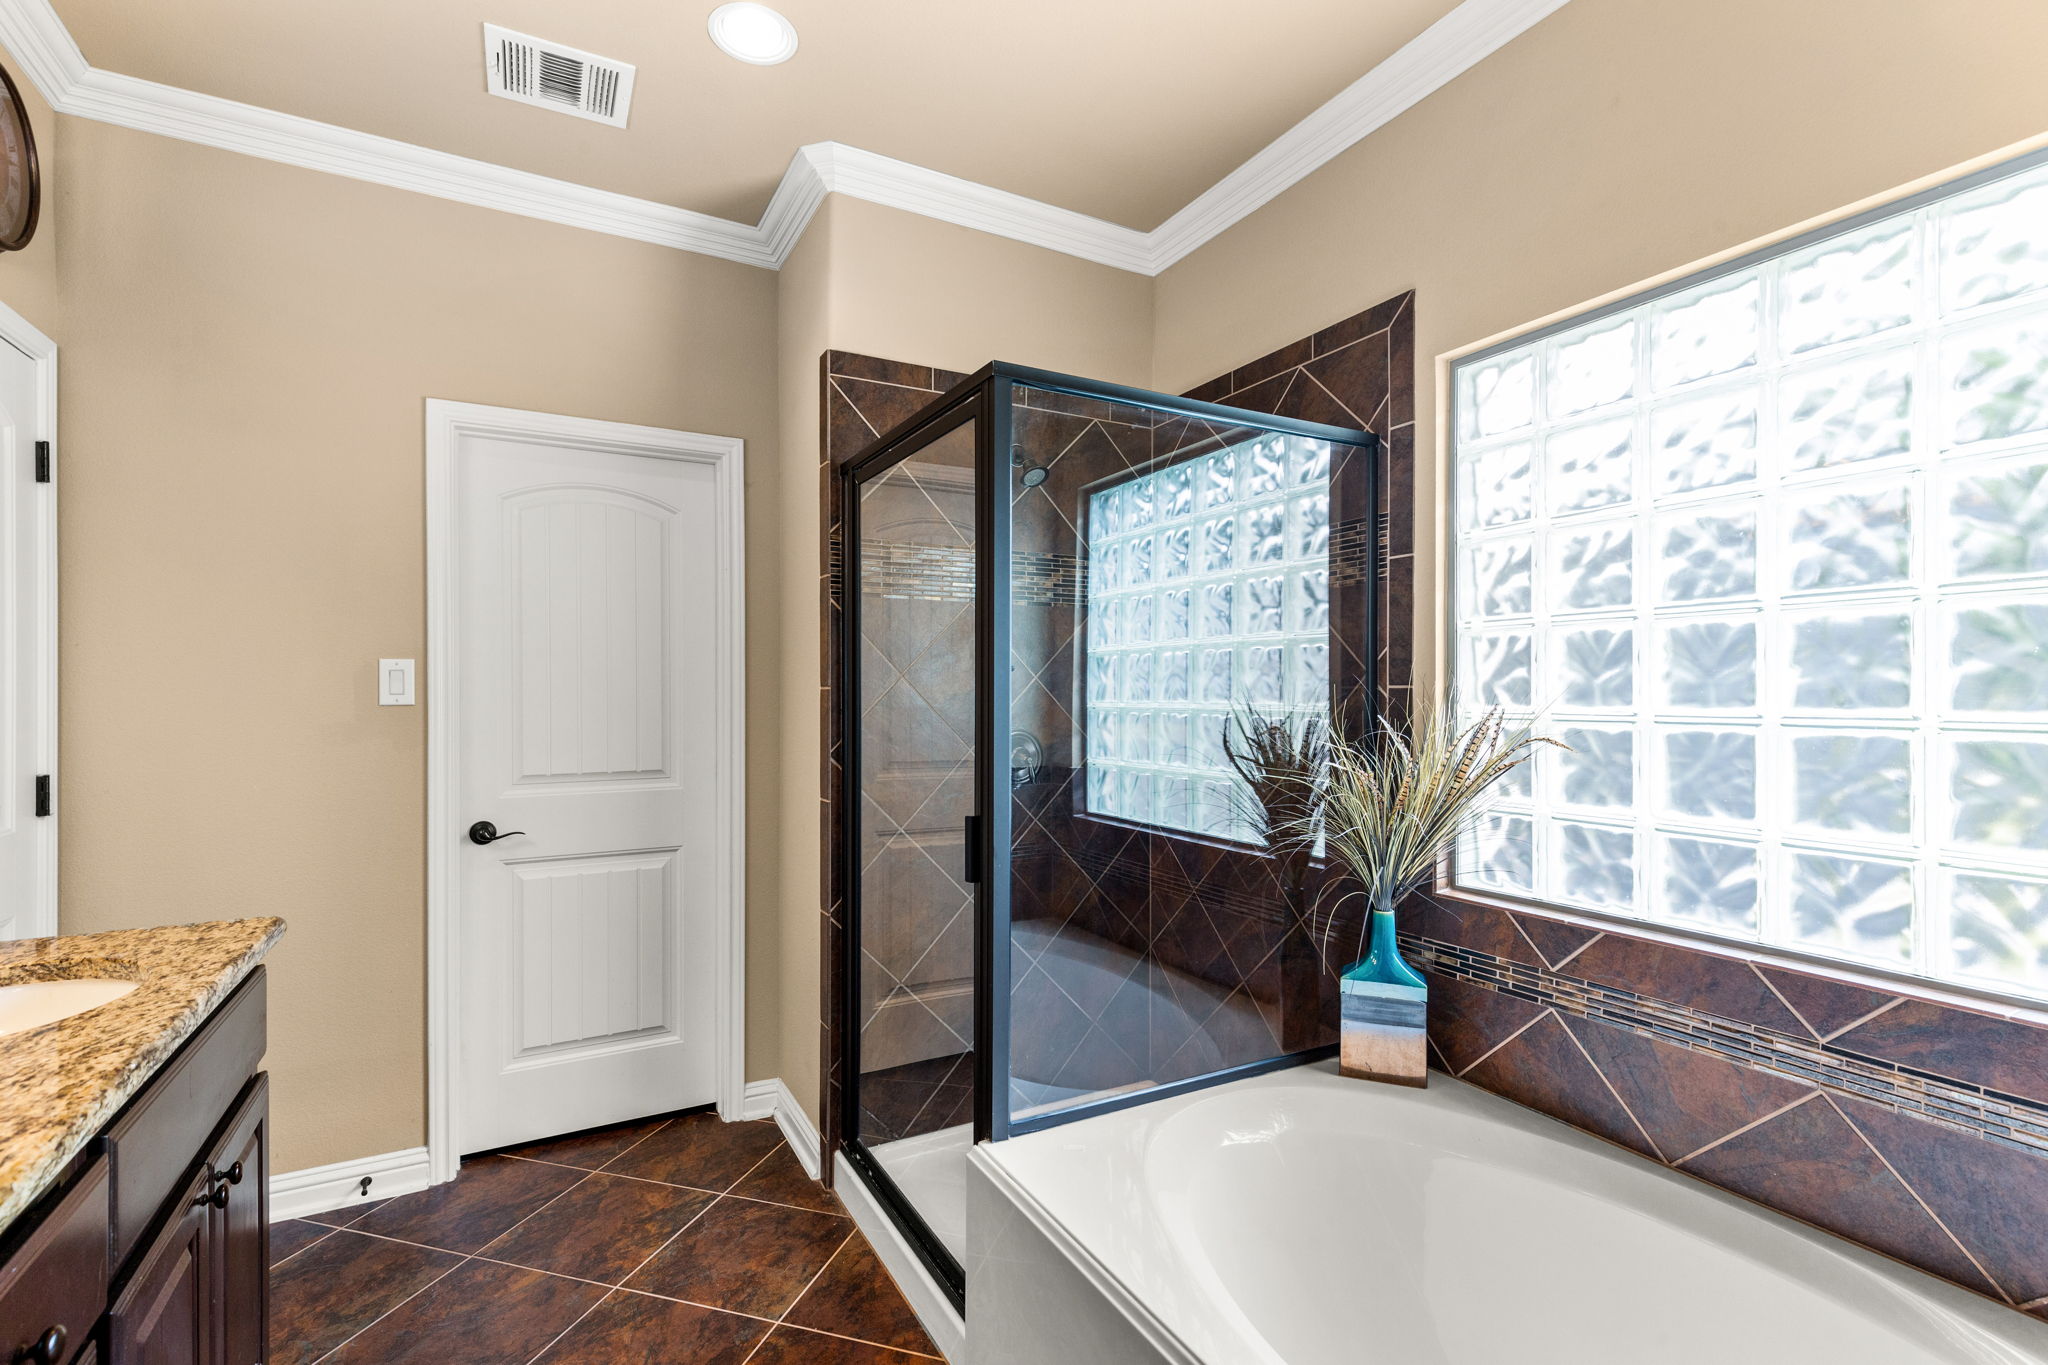 Garden tub & separate shower in primary suite